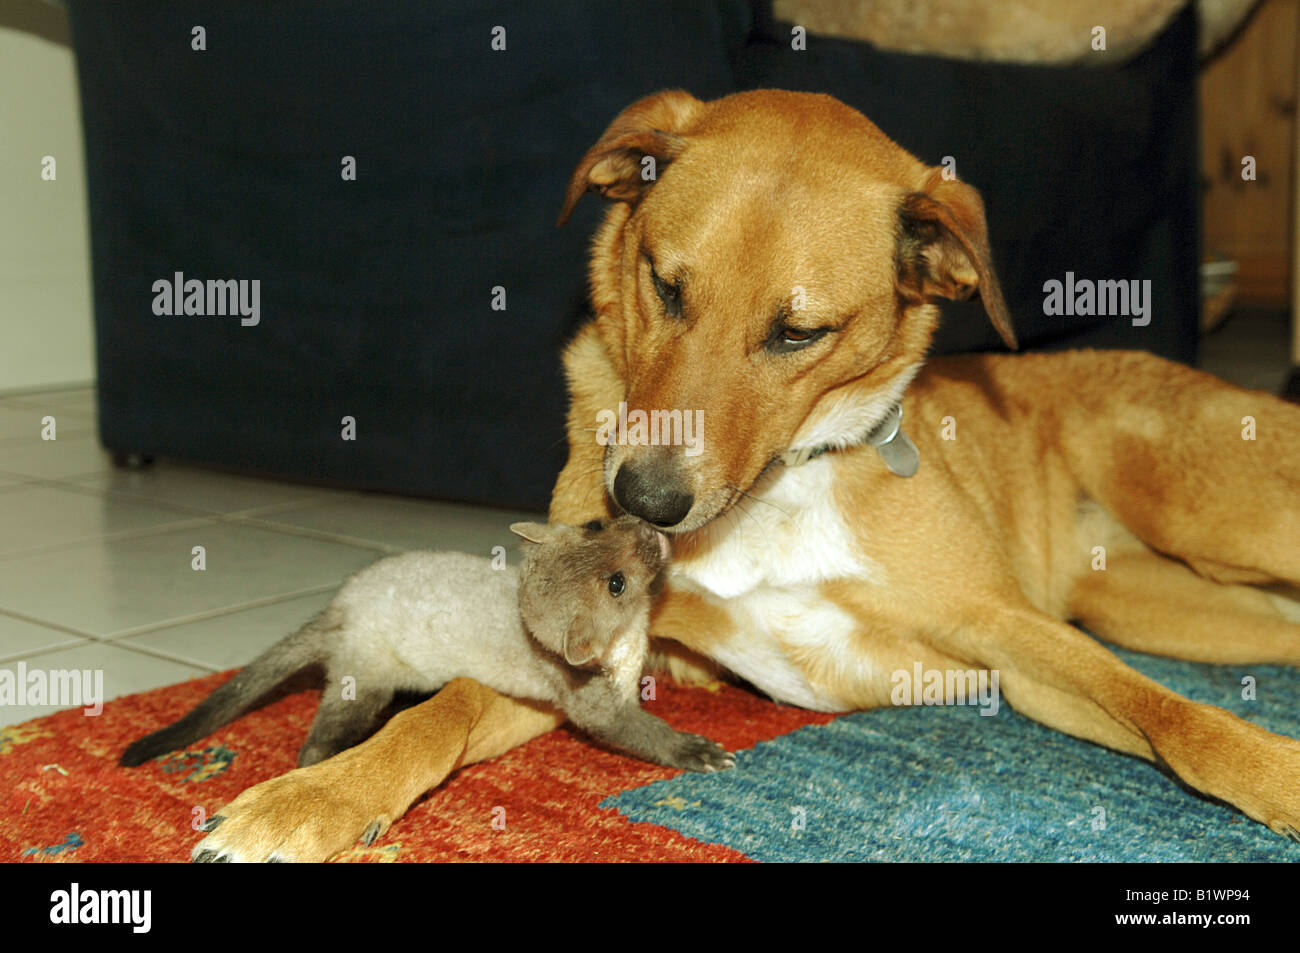 animal friendship: half breed dog and young beech marten - smooching Stock Photo